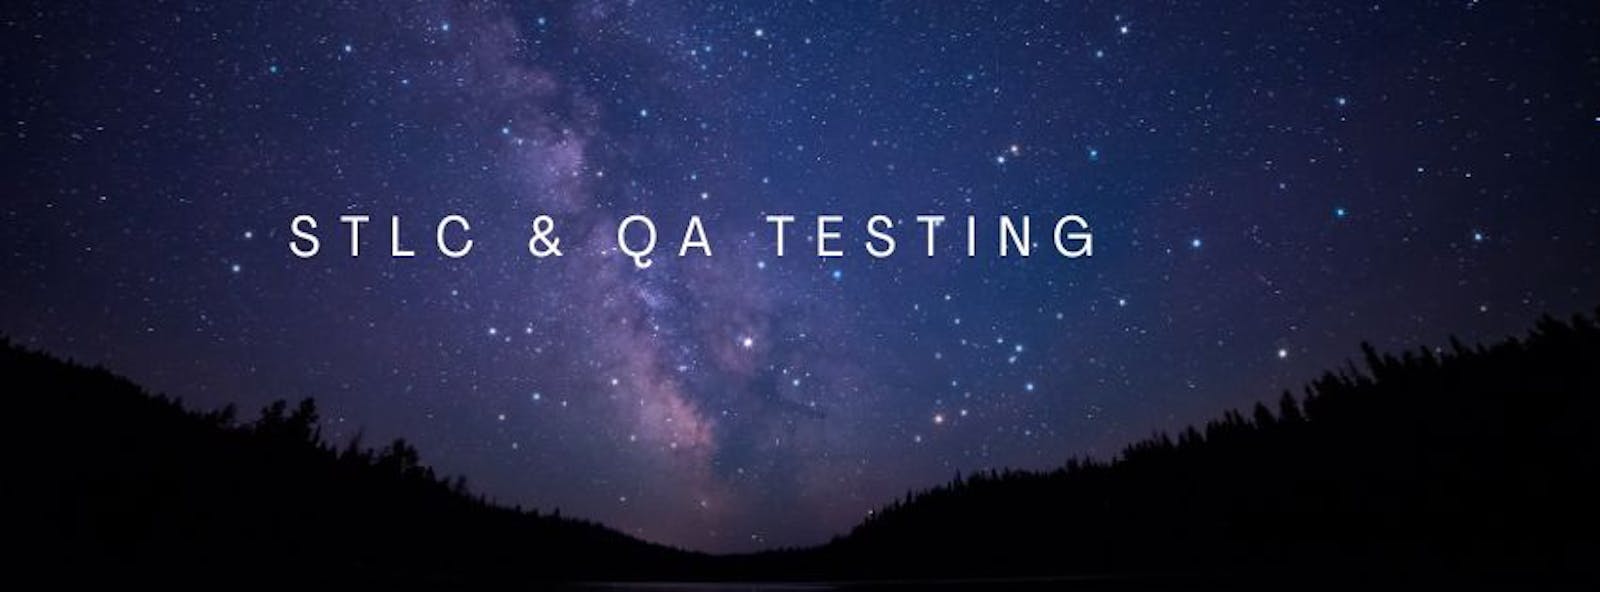 Task 3- STLC & QA Testing